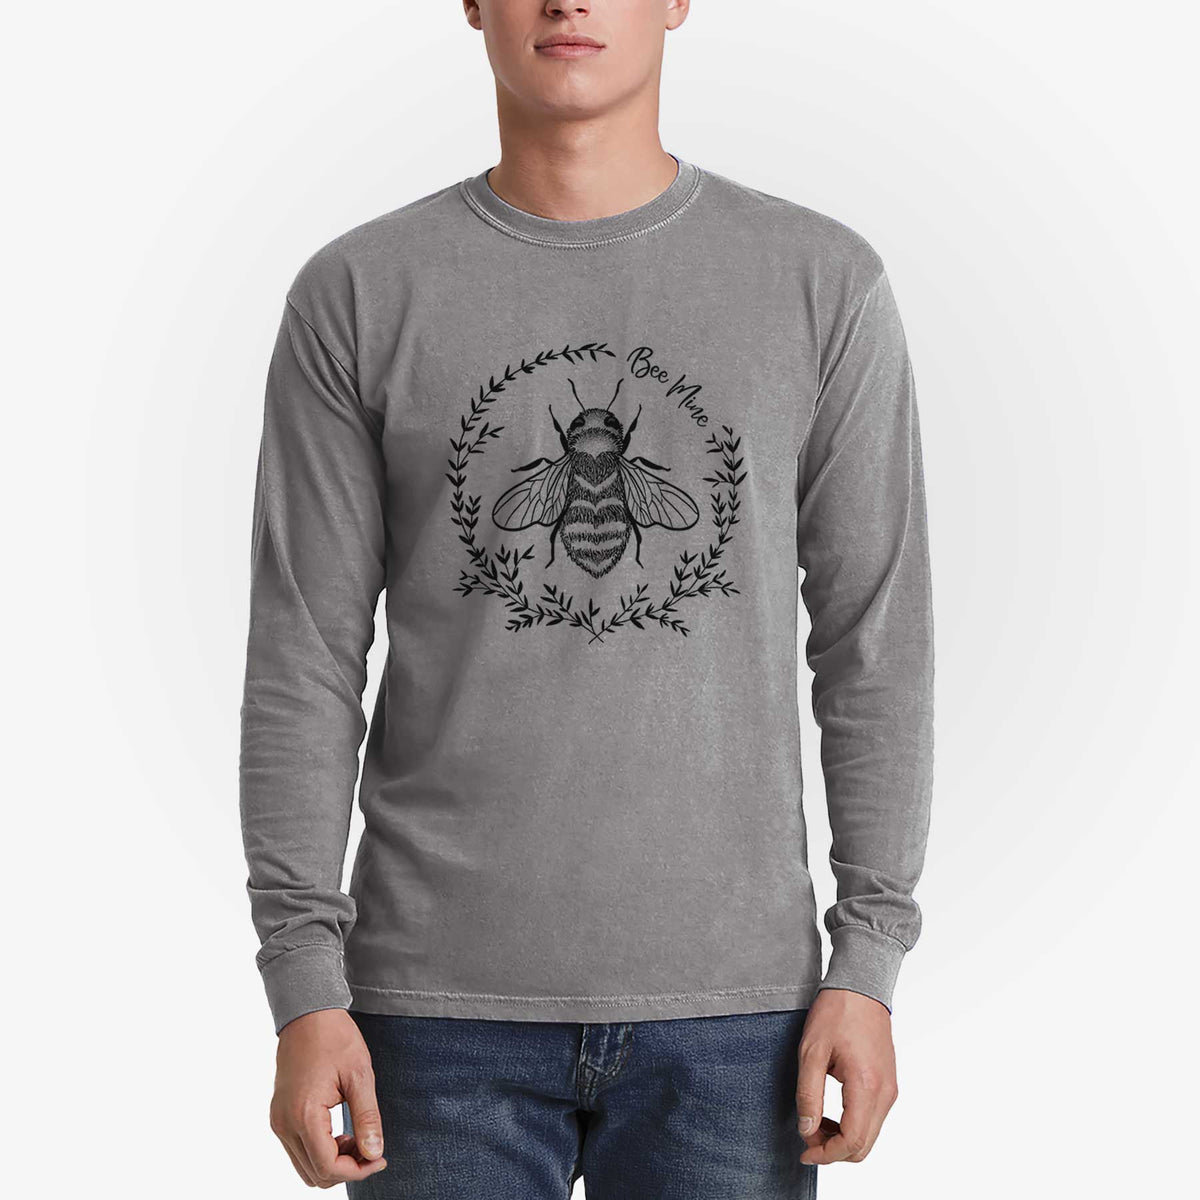 Bee Mine - Heavyweight 100% Cotton Long Sleeve